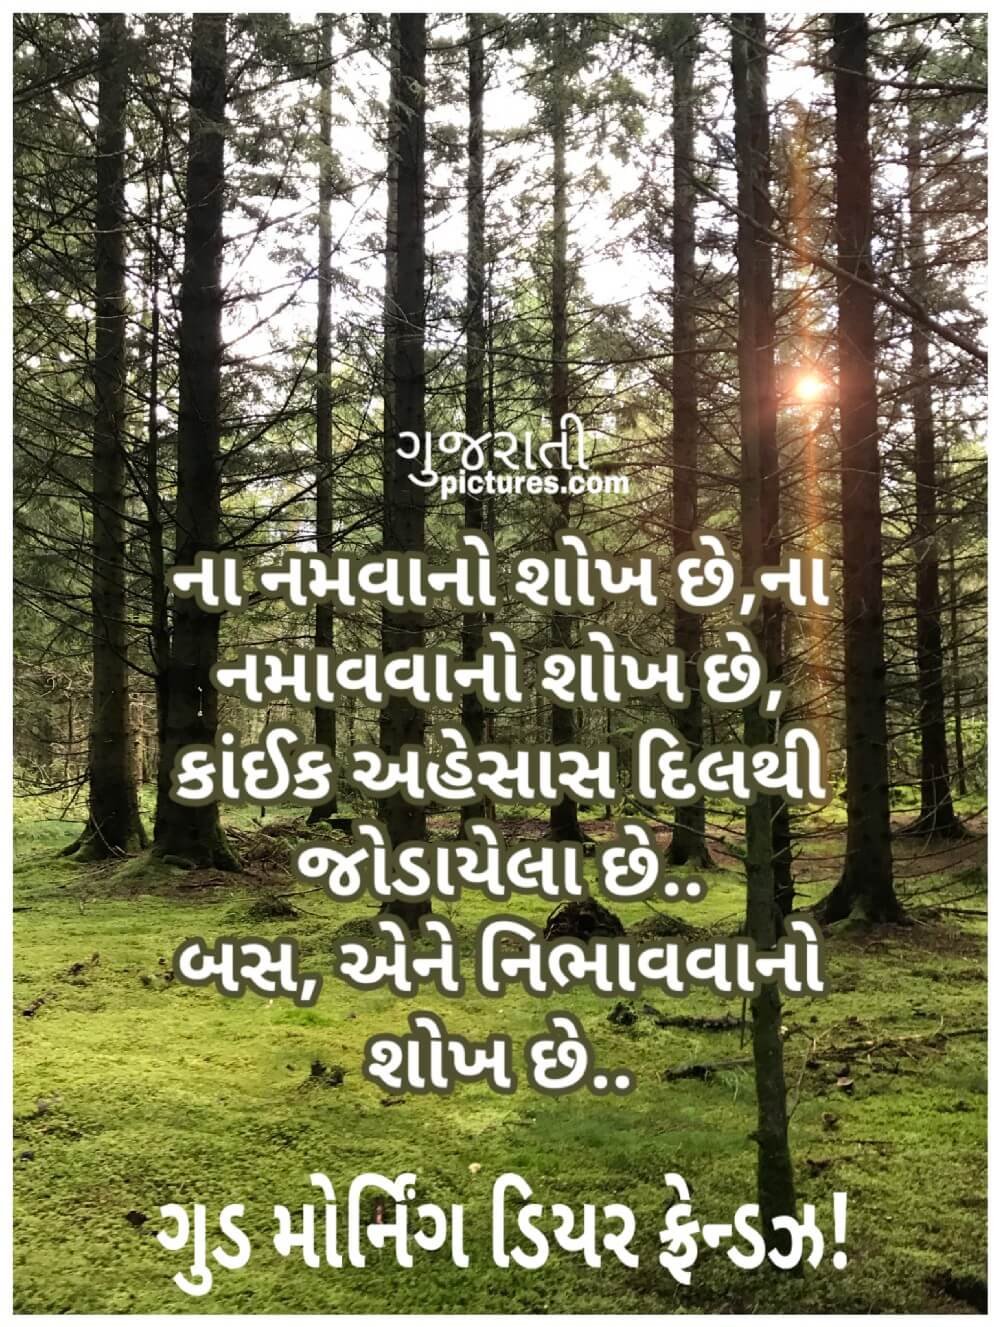 Gujarati suvichar post - Gujarati Pictures – Website Dedicated to ...